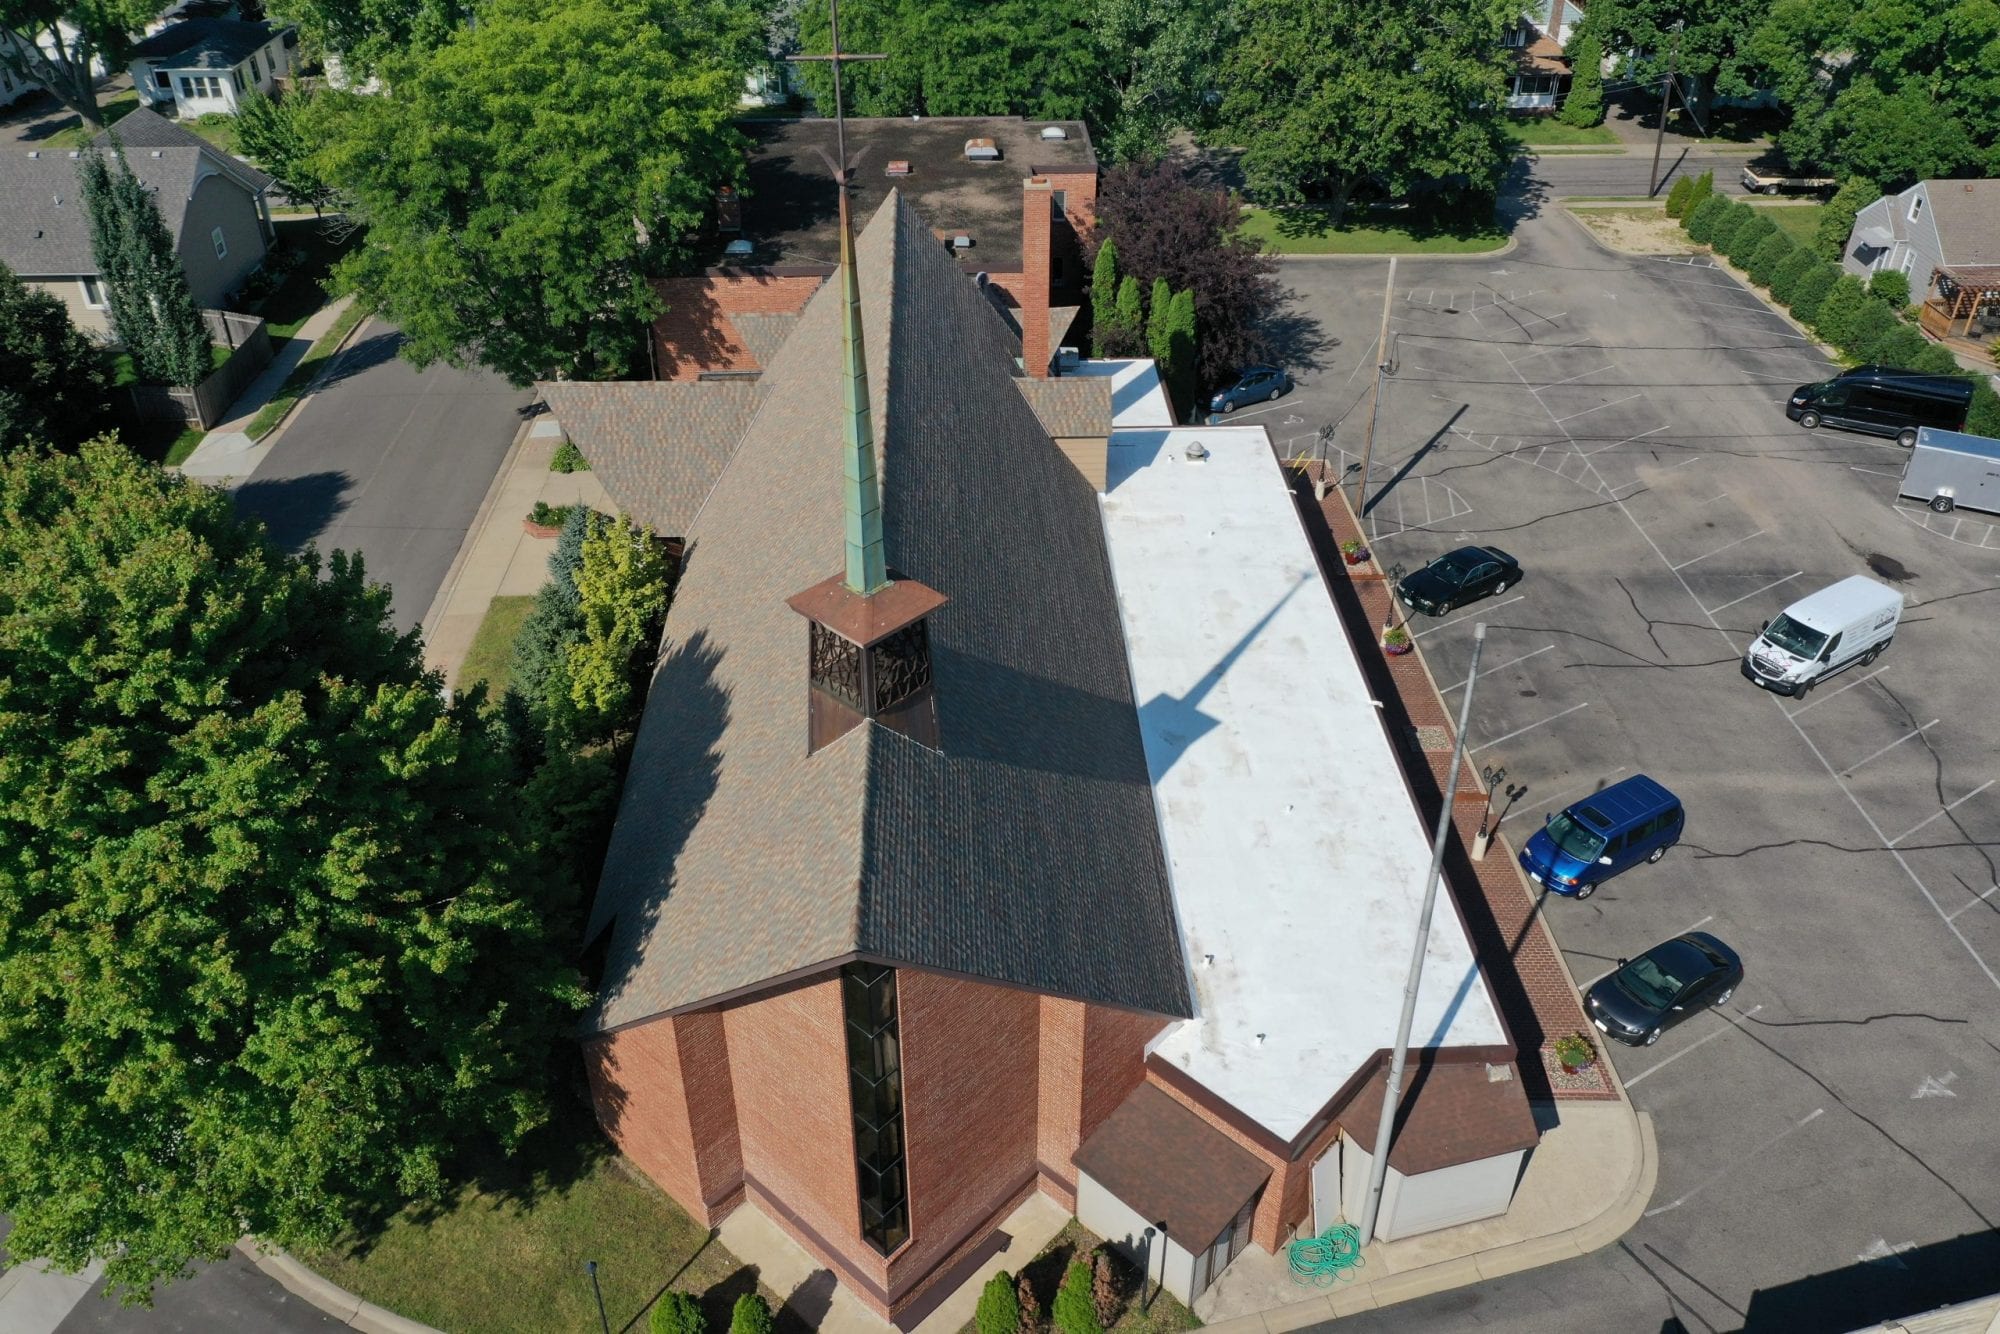 church roof